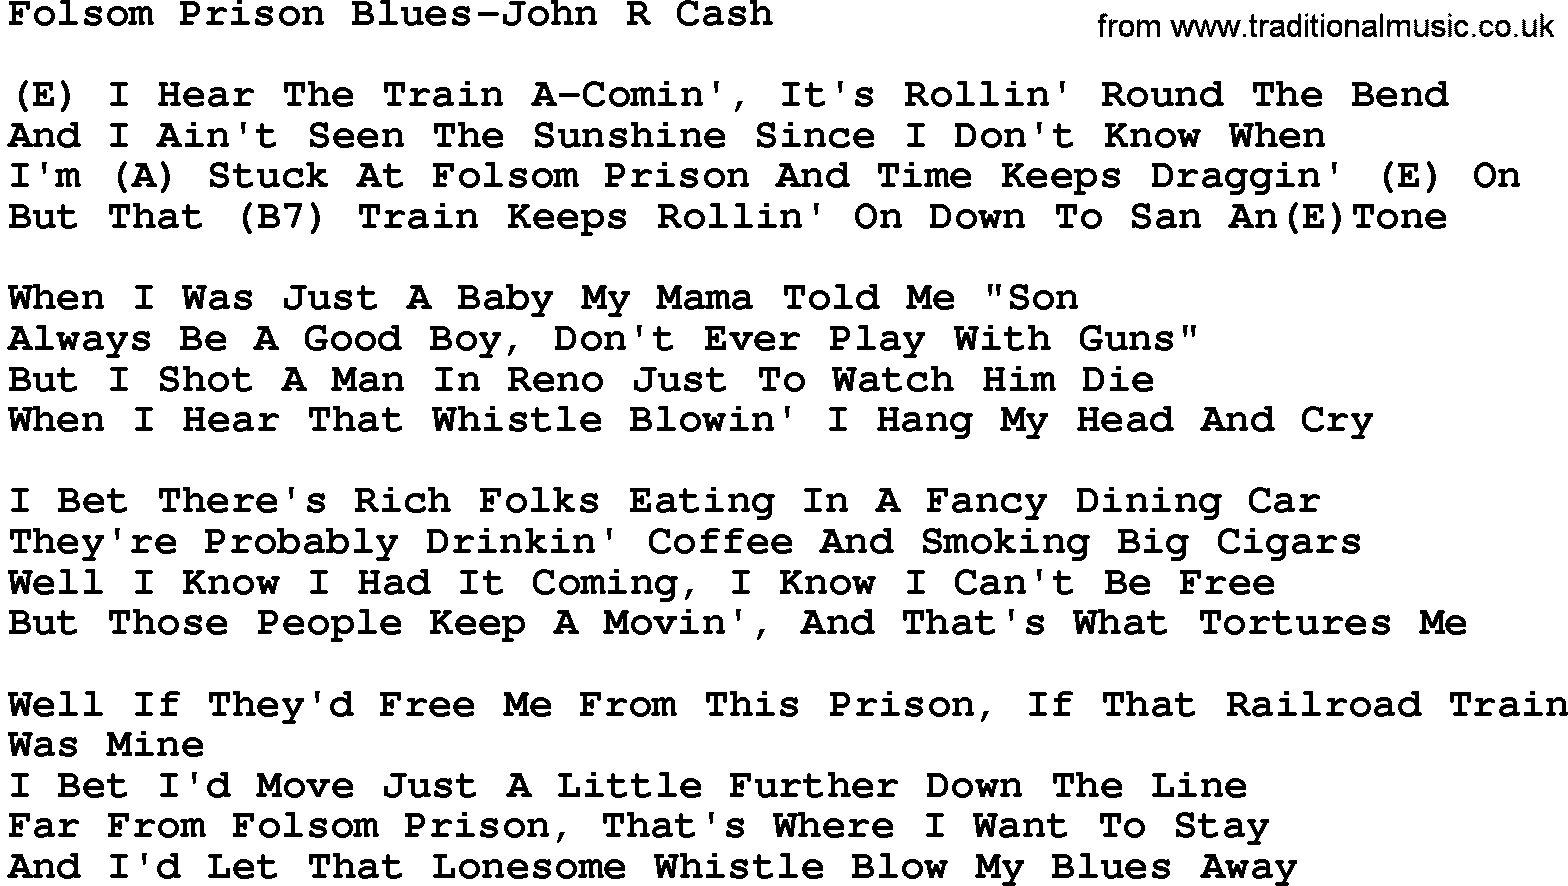 Country music song: Folsom Prison Blues-John R Cash lyrics and chords